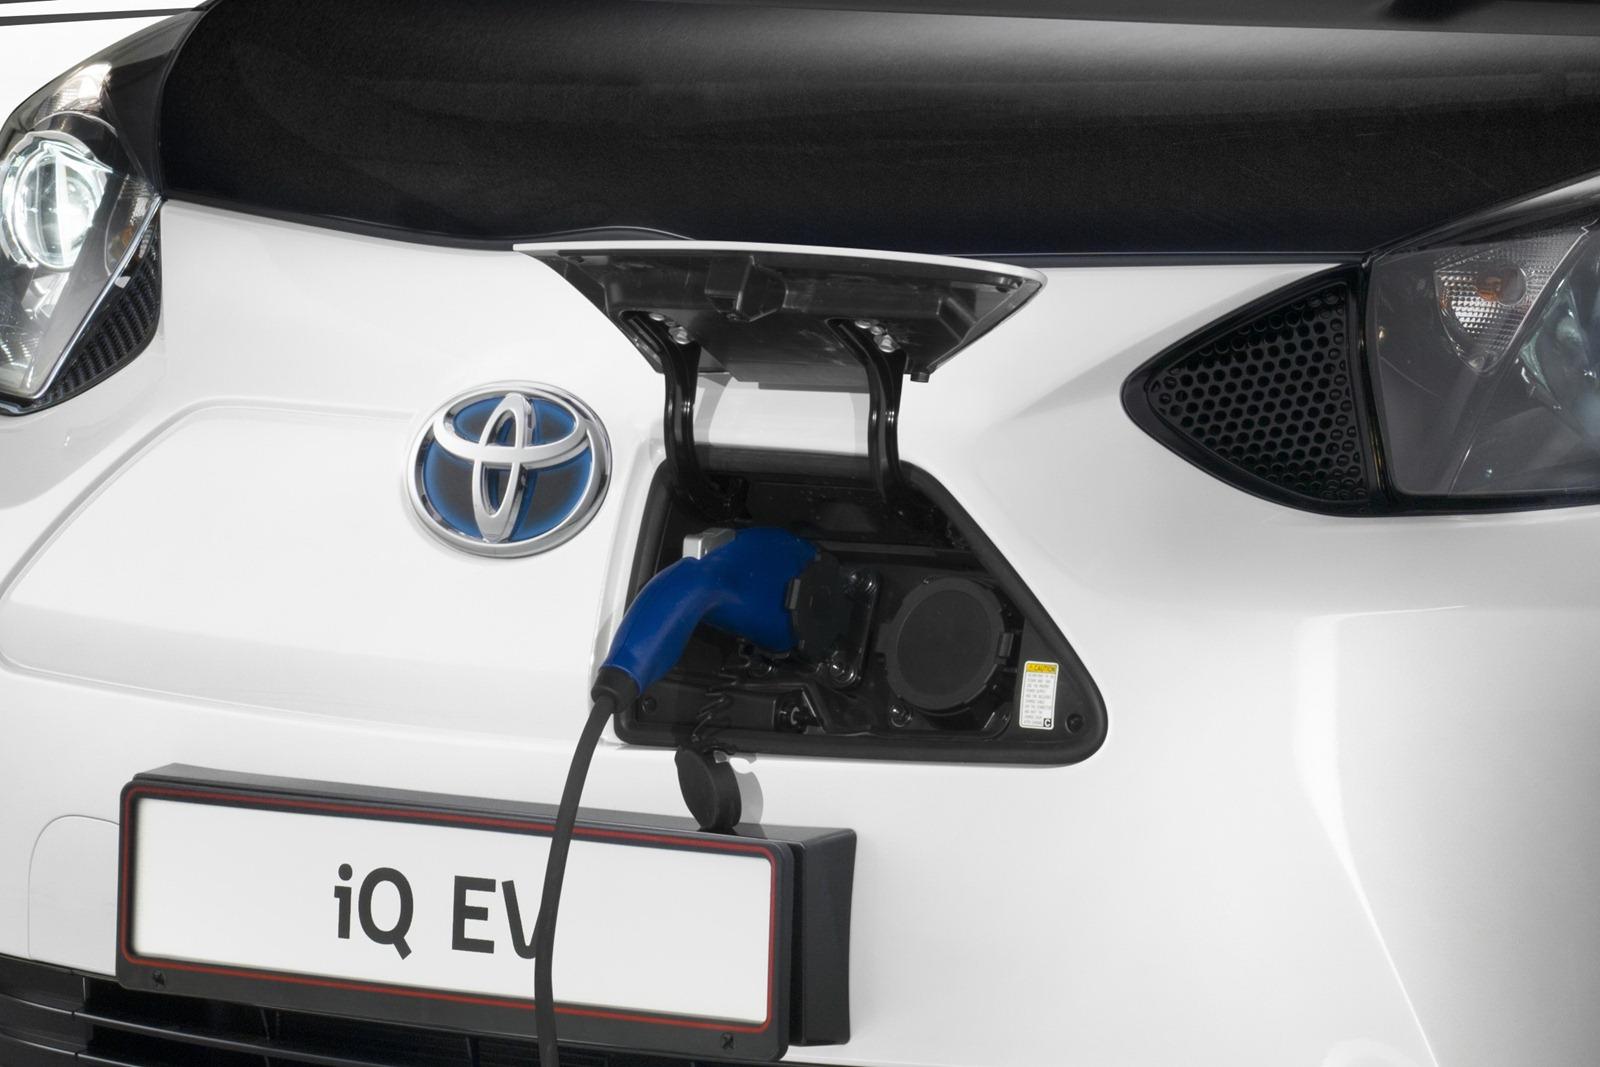 Toyota IQ EV